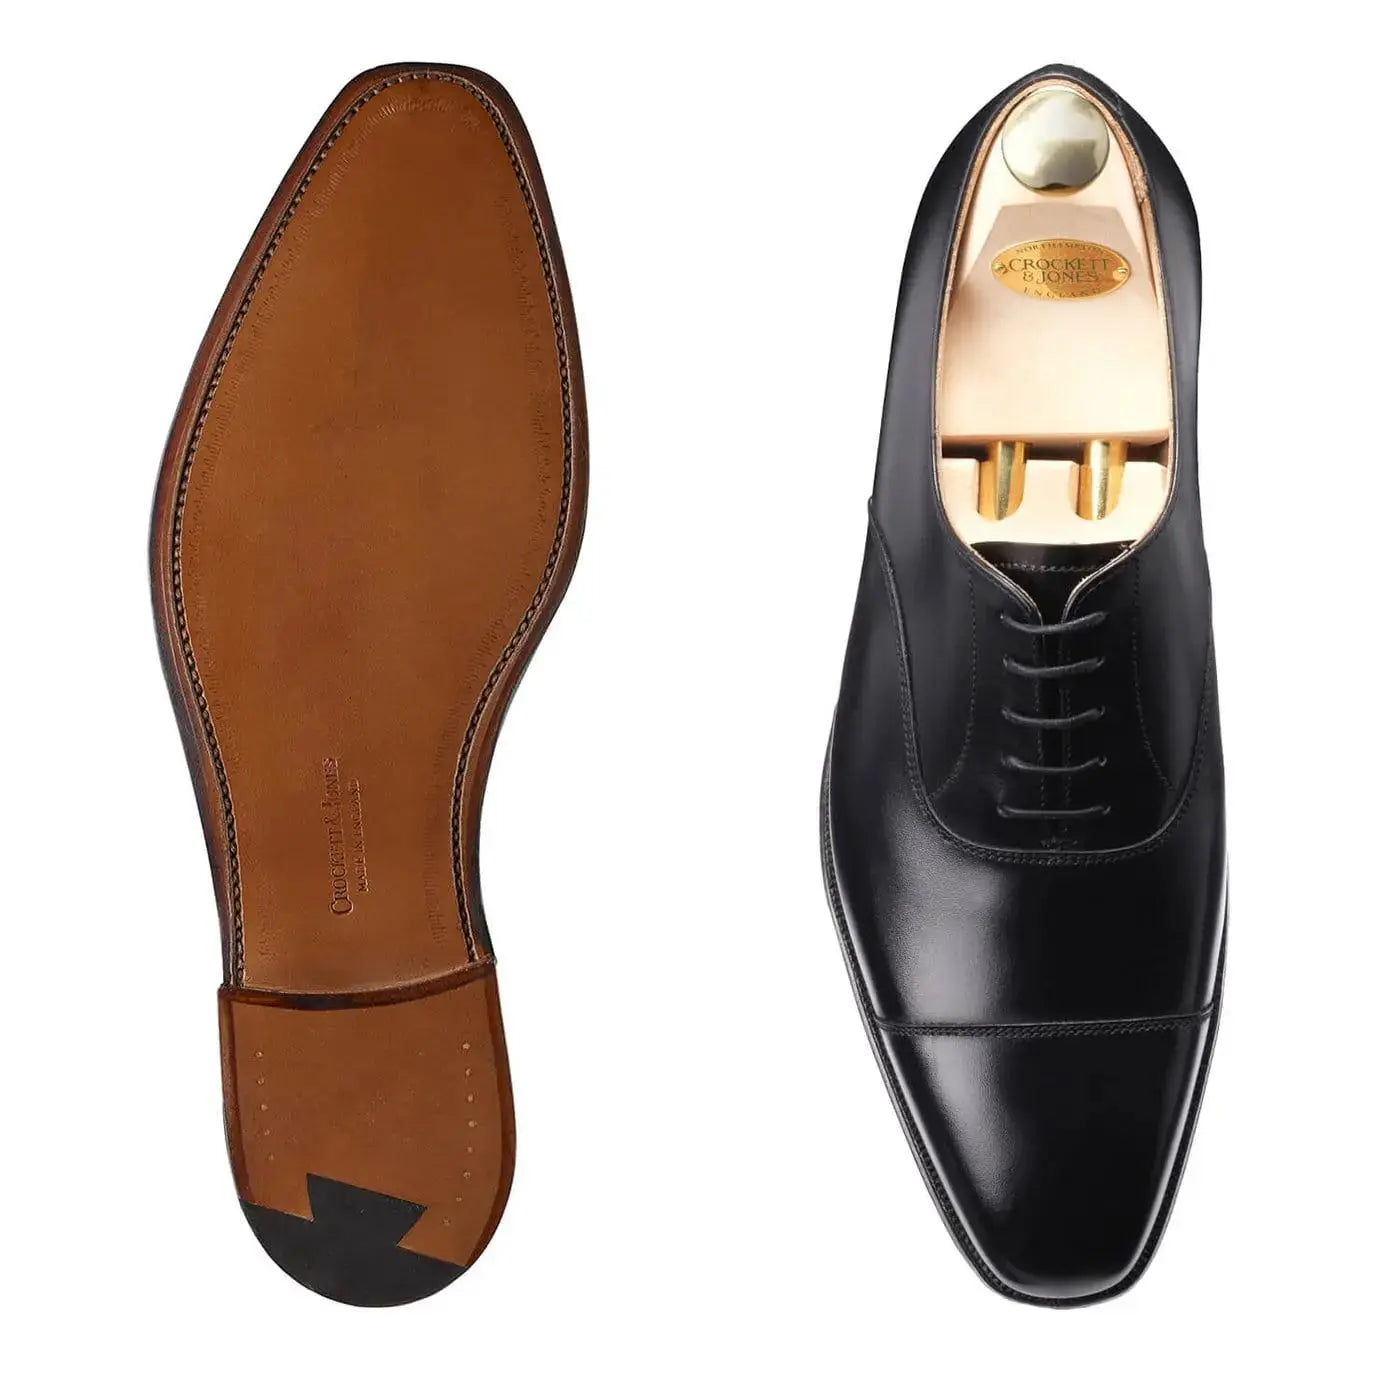 Hallam Back Calf Oxford Shoes - E Fitting  Crockett & Jones   